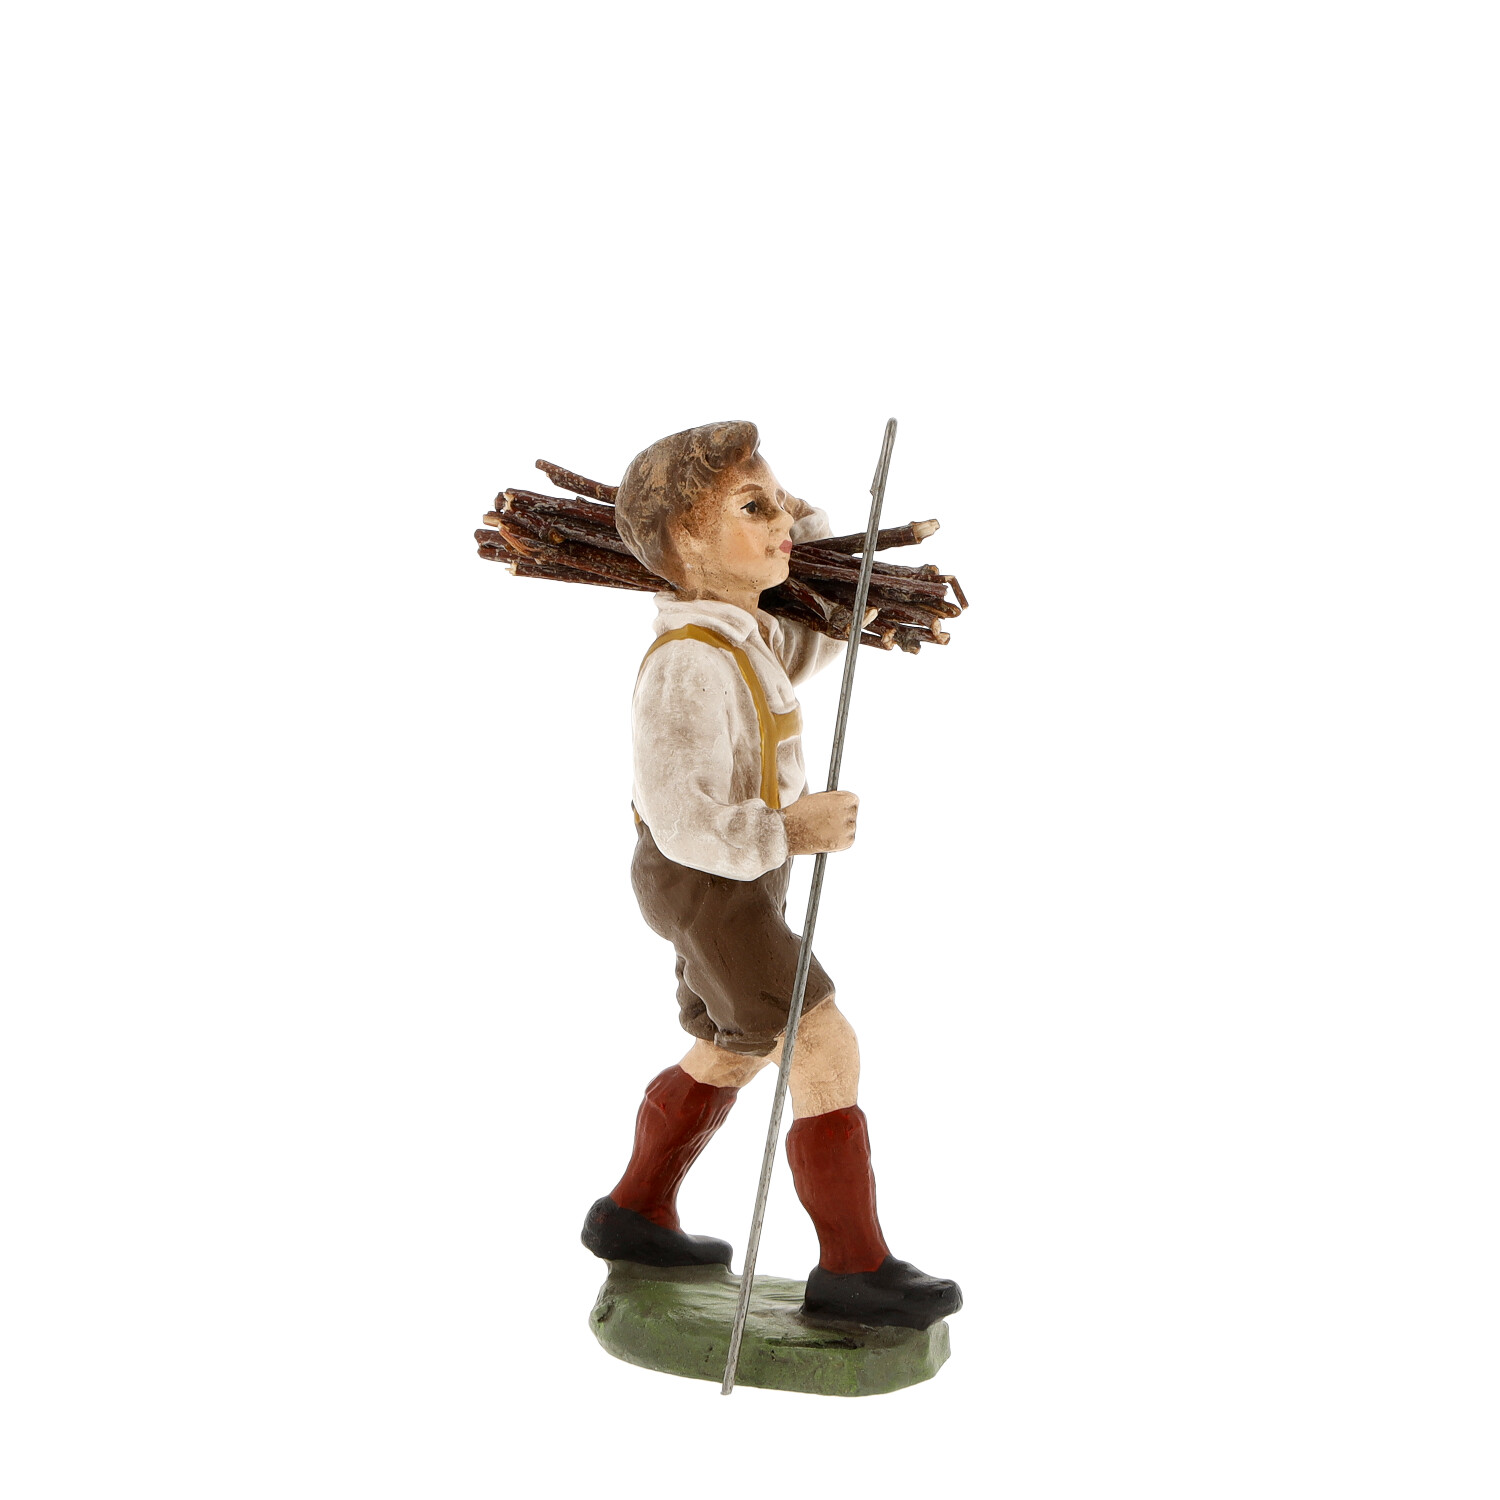 Junge mit Holzbündel, zu 12cm Marolin Krippenfiguren - made in Germany